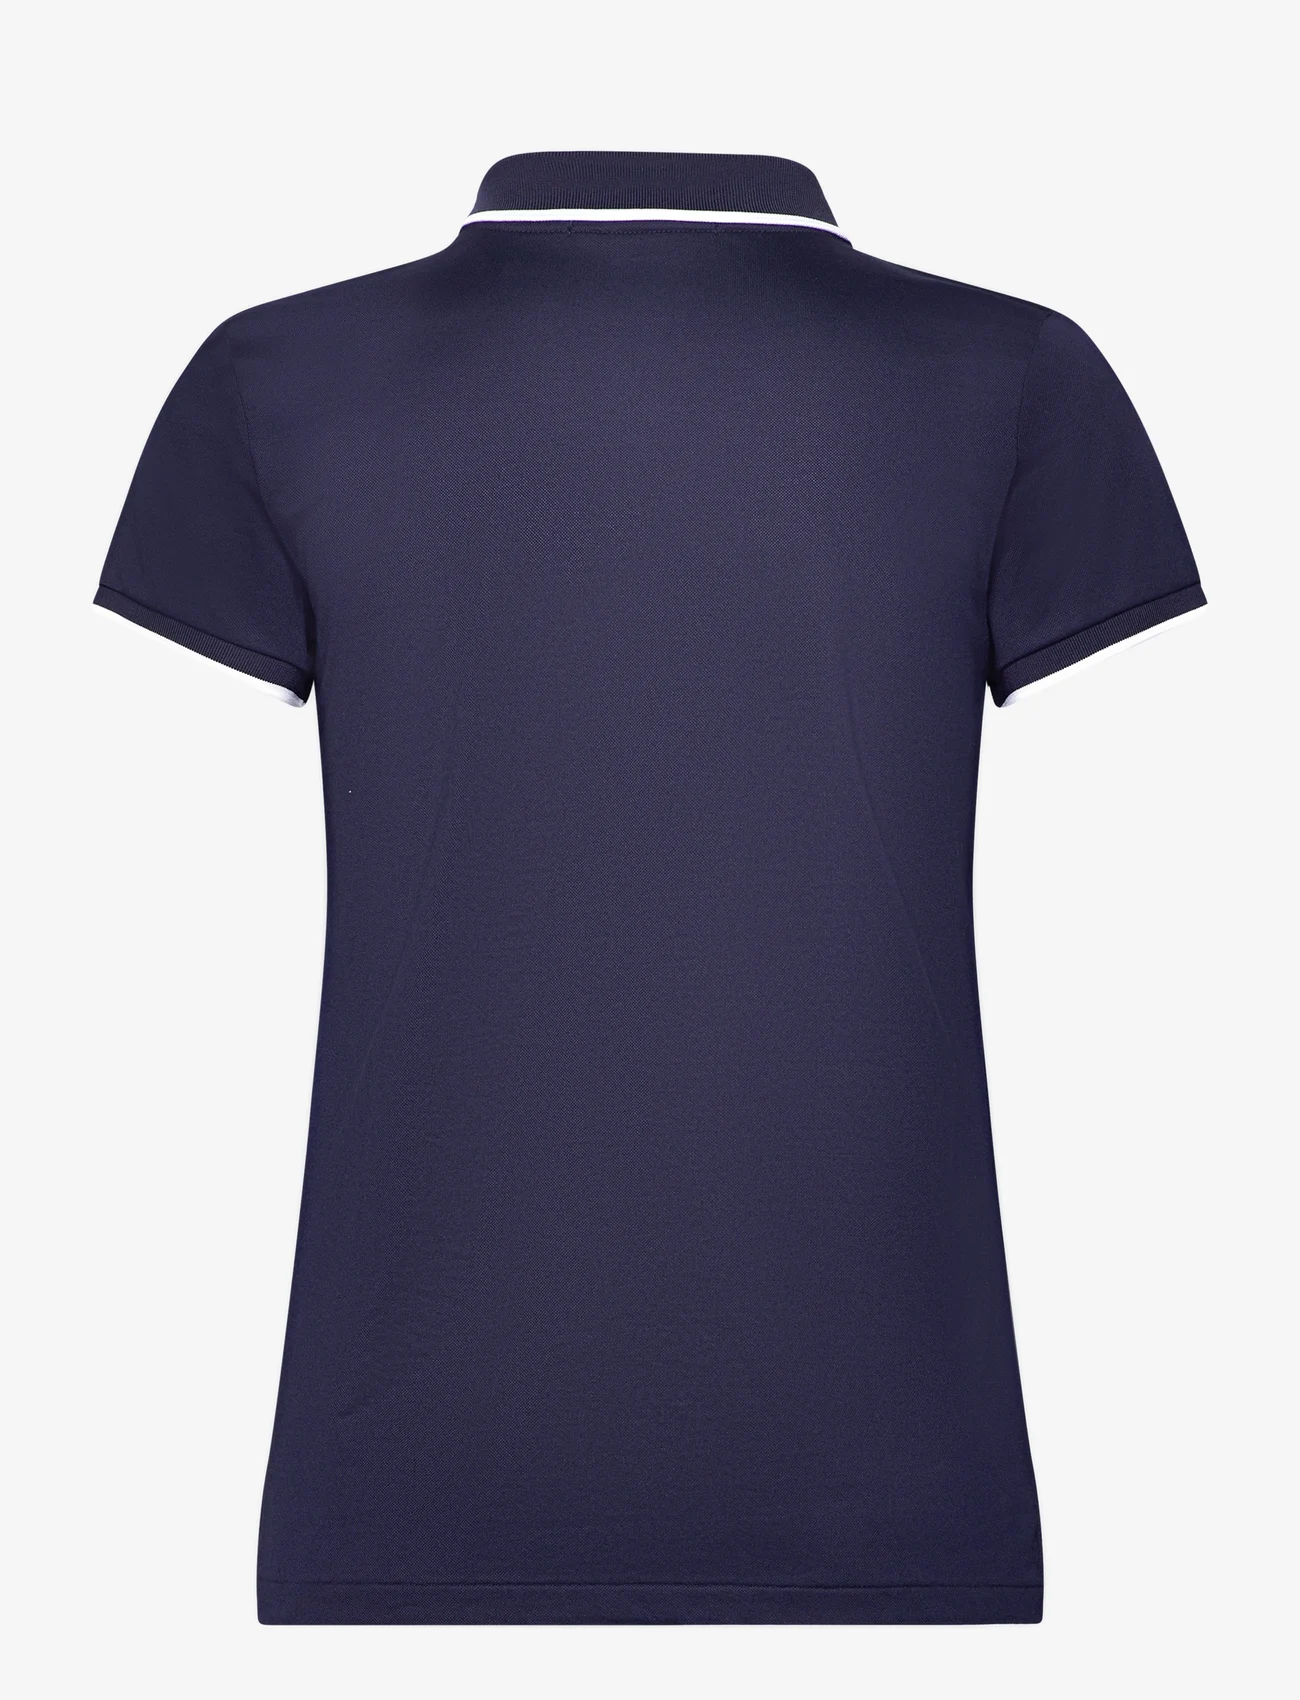 Ralph Lauren Golf - Tailored Fit Polo Bear Polo Shirt - polo marškinėliai - refined navy - 1